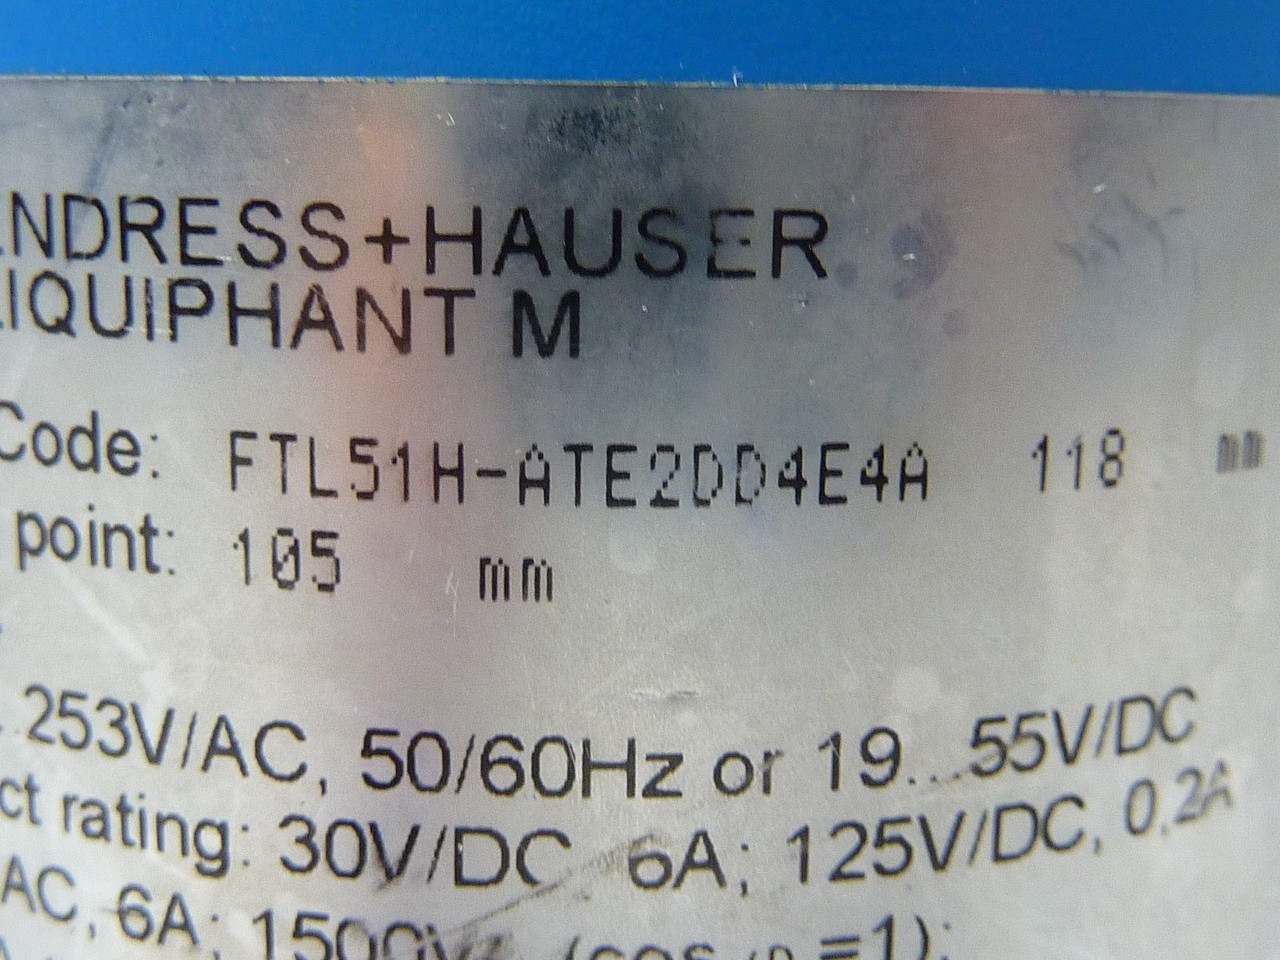 Endress Hauser FTL51H-ATE2DD4E4A Liquid Level Sensor Limit Switch 253VAC USED